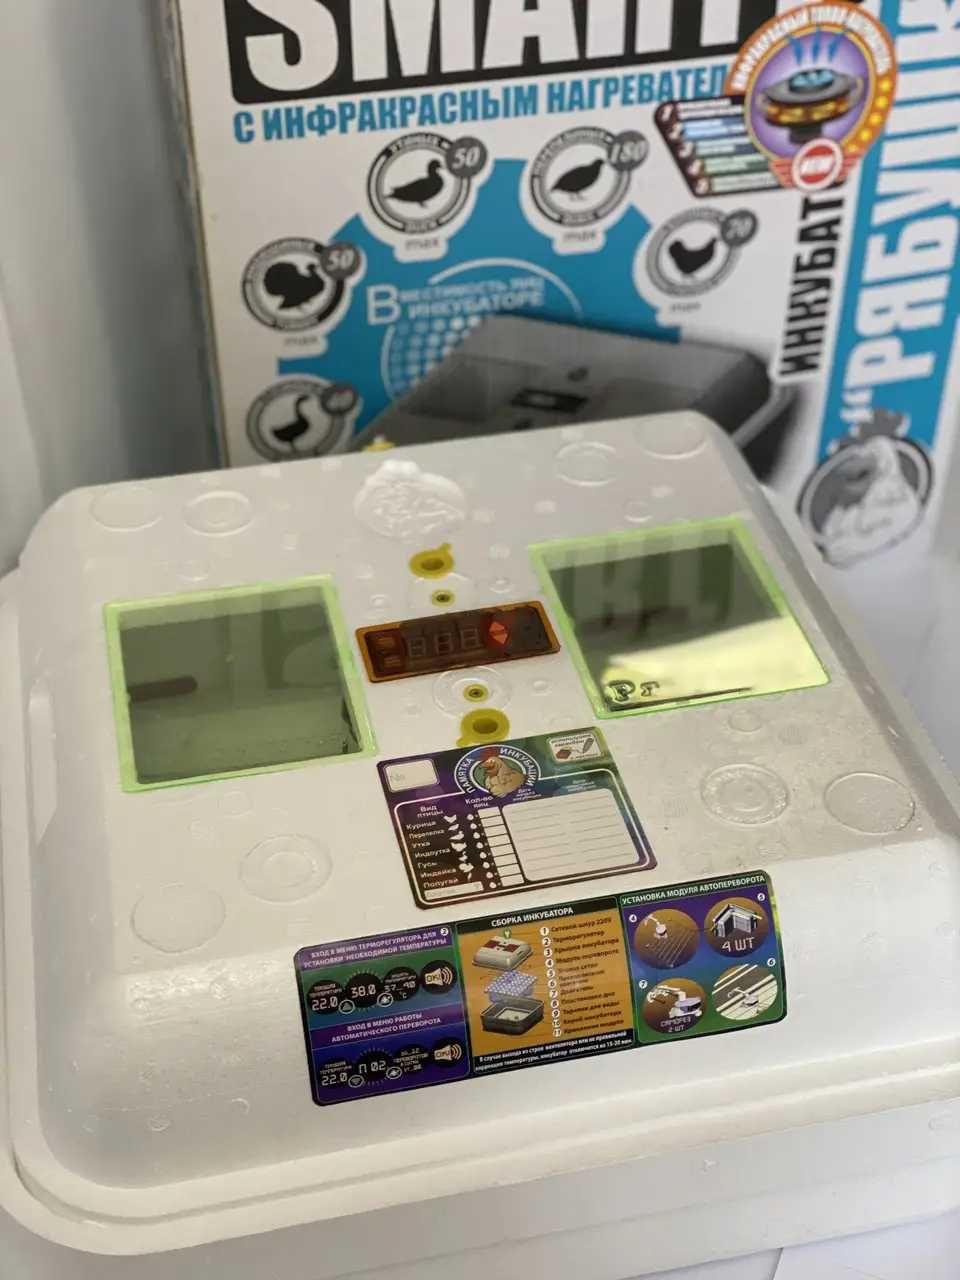 Инкубатор для яиц рябушка 70, автоматический, цифровой, таймер, тэн